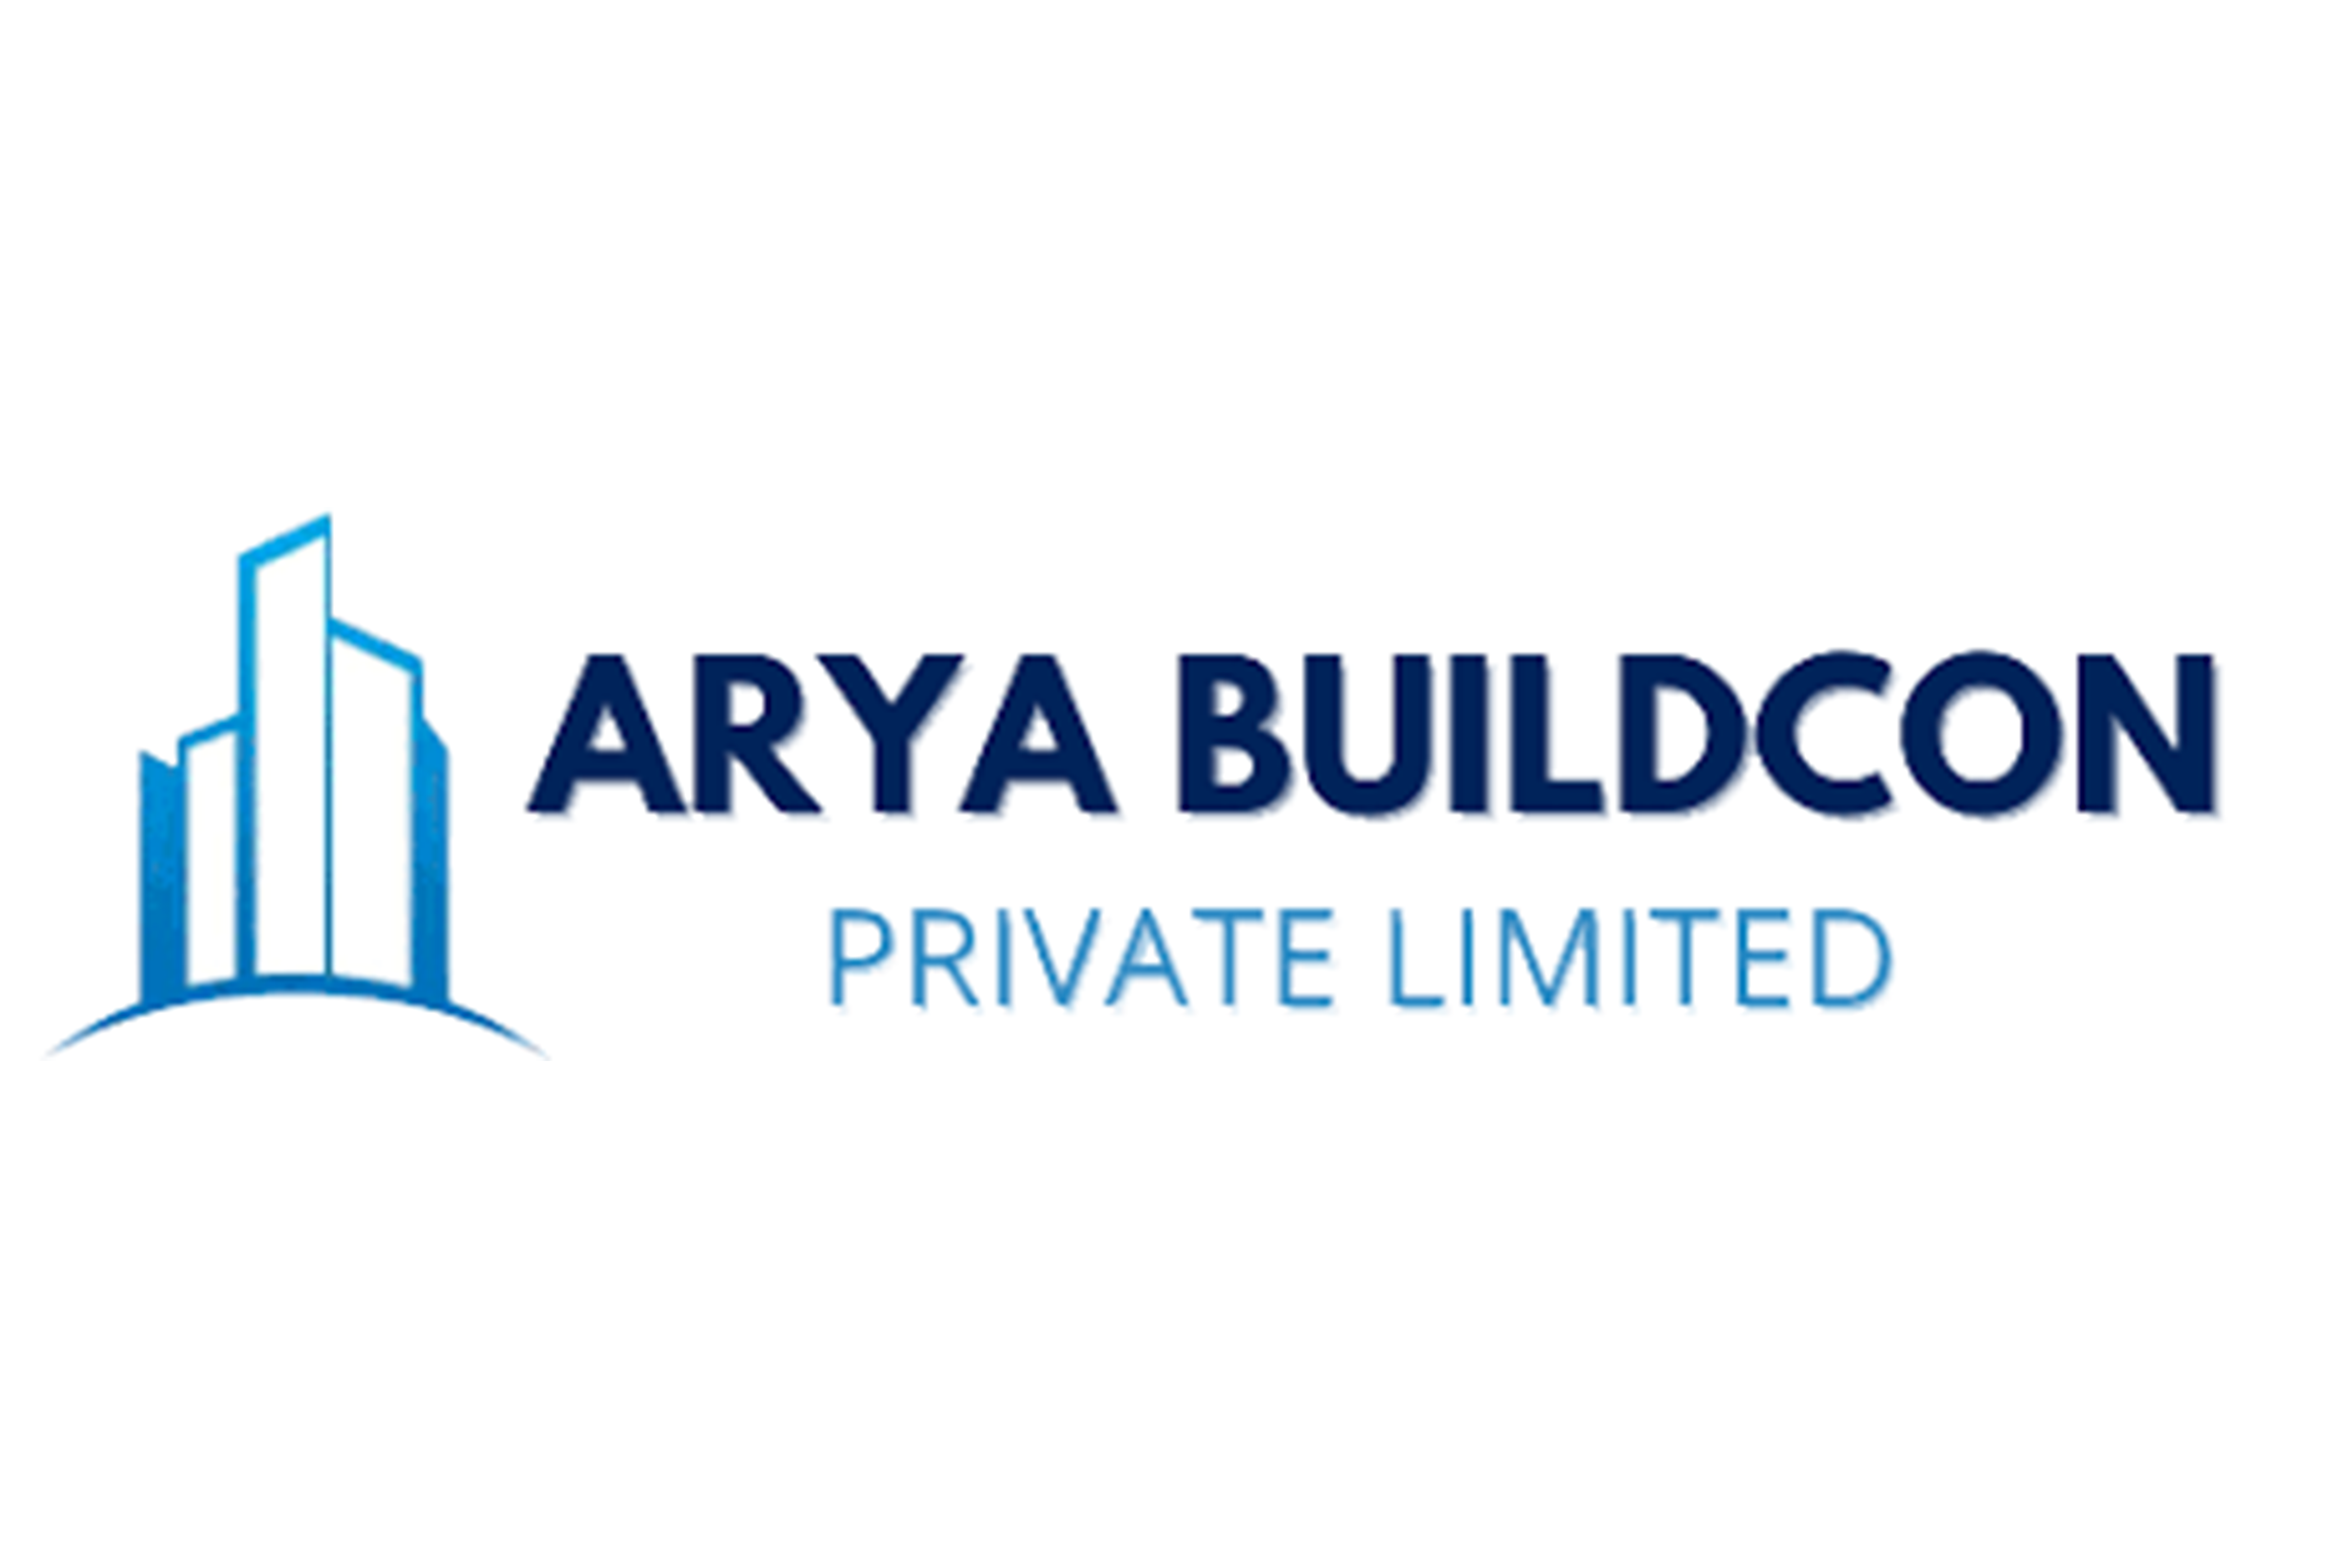 Arya Buildcon